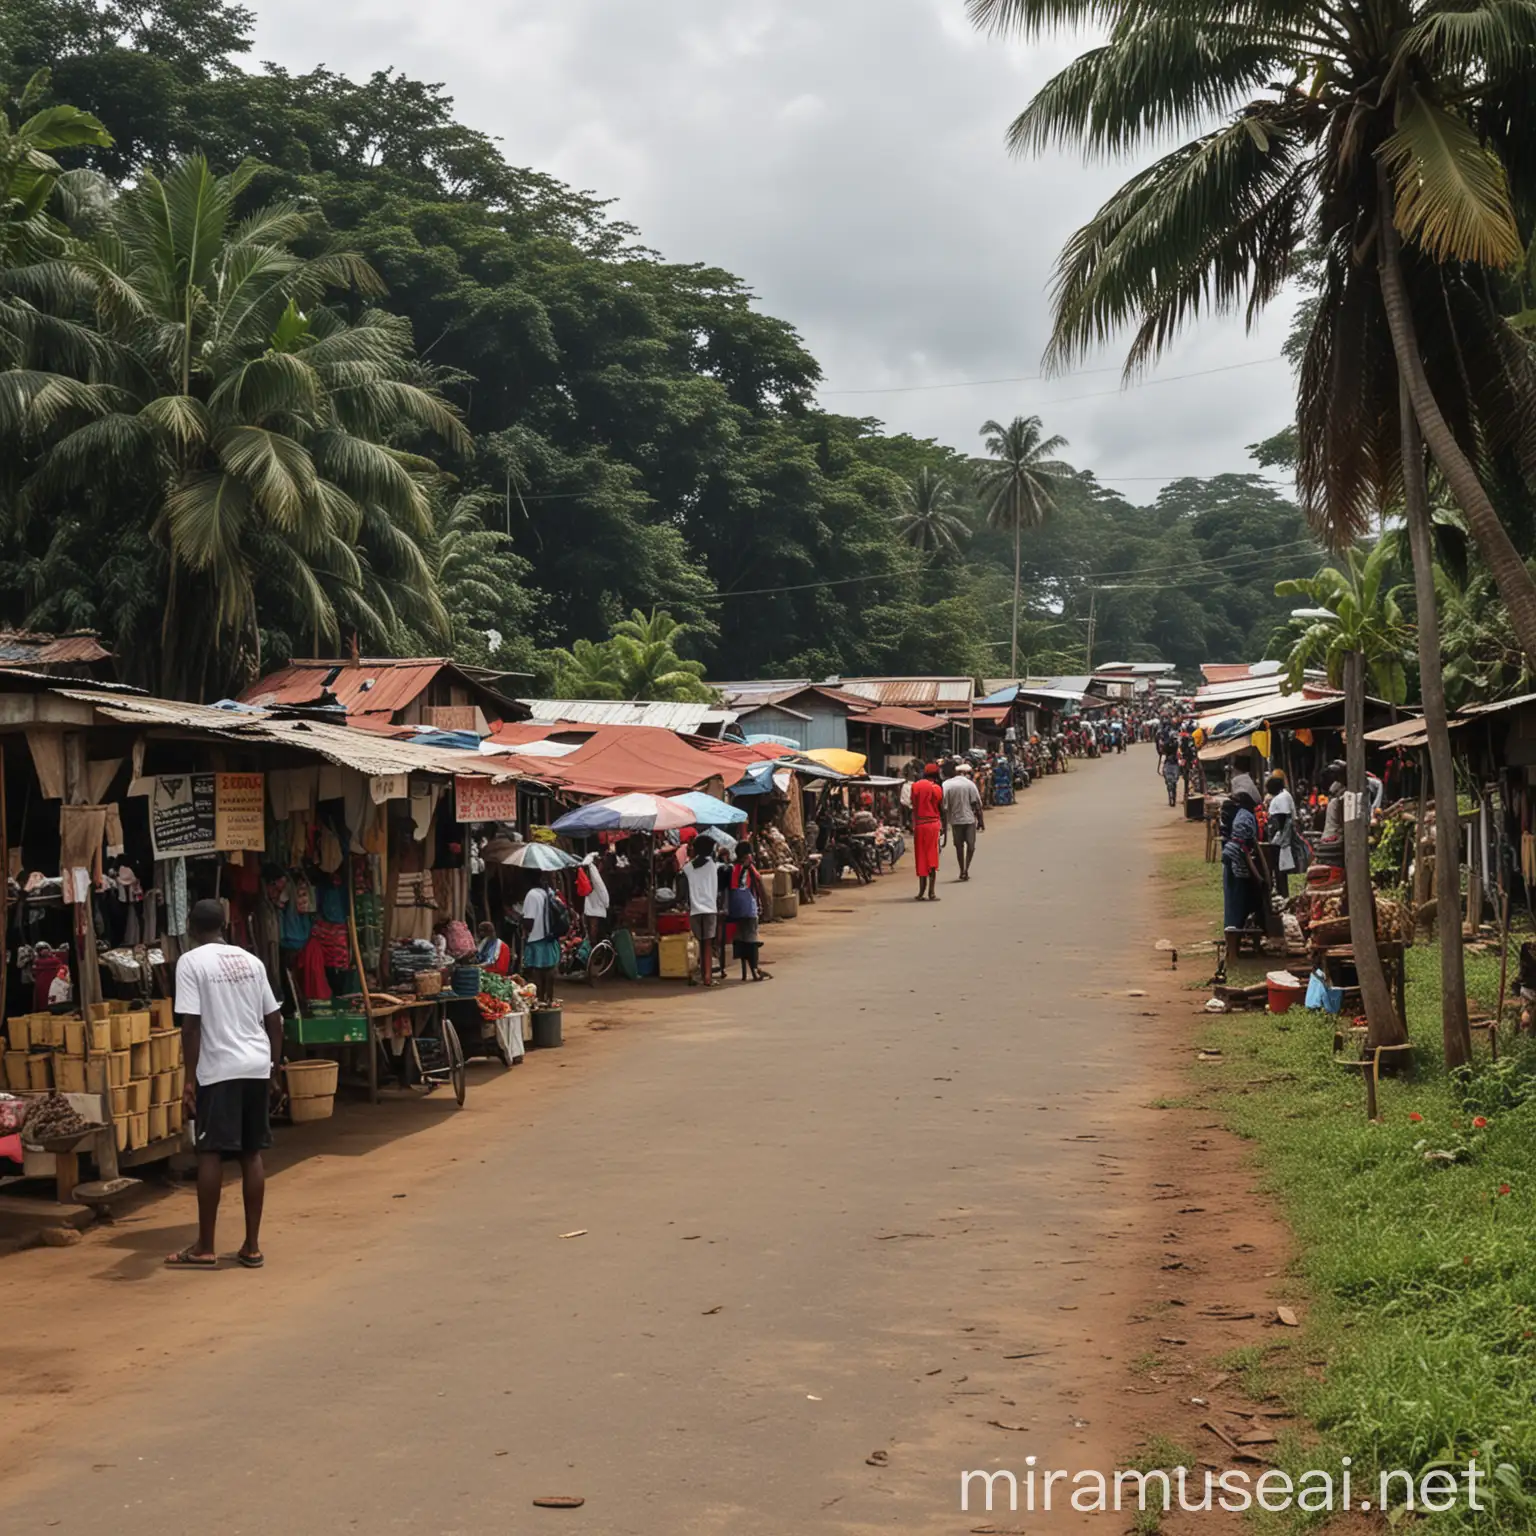 LIBERIA LOOP:MONROVIA MARKETS AND SAPO NATIONAL PARK